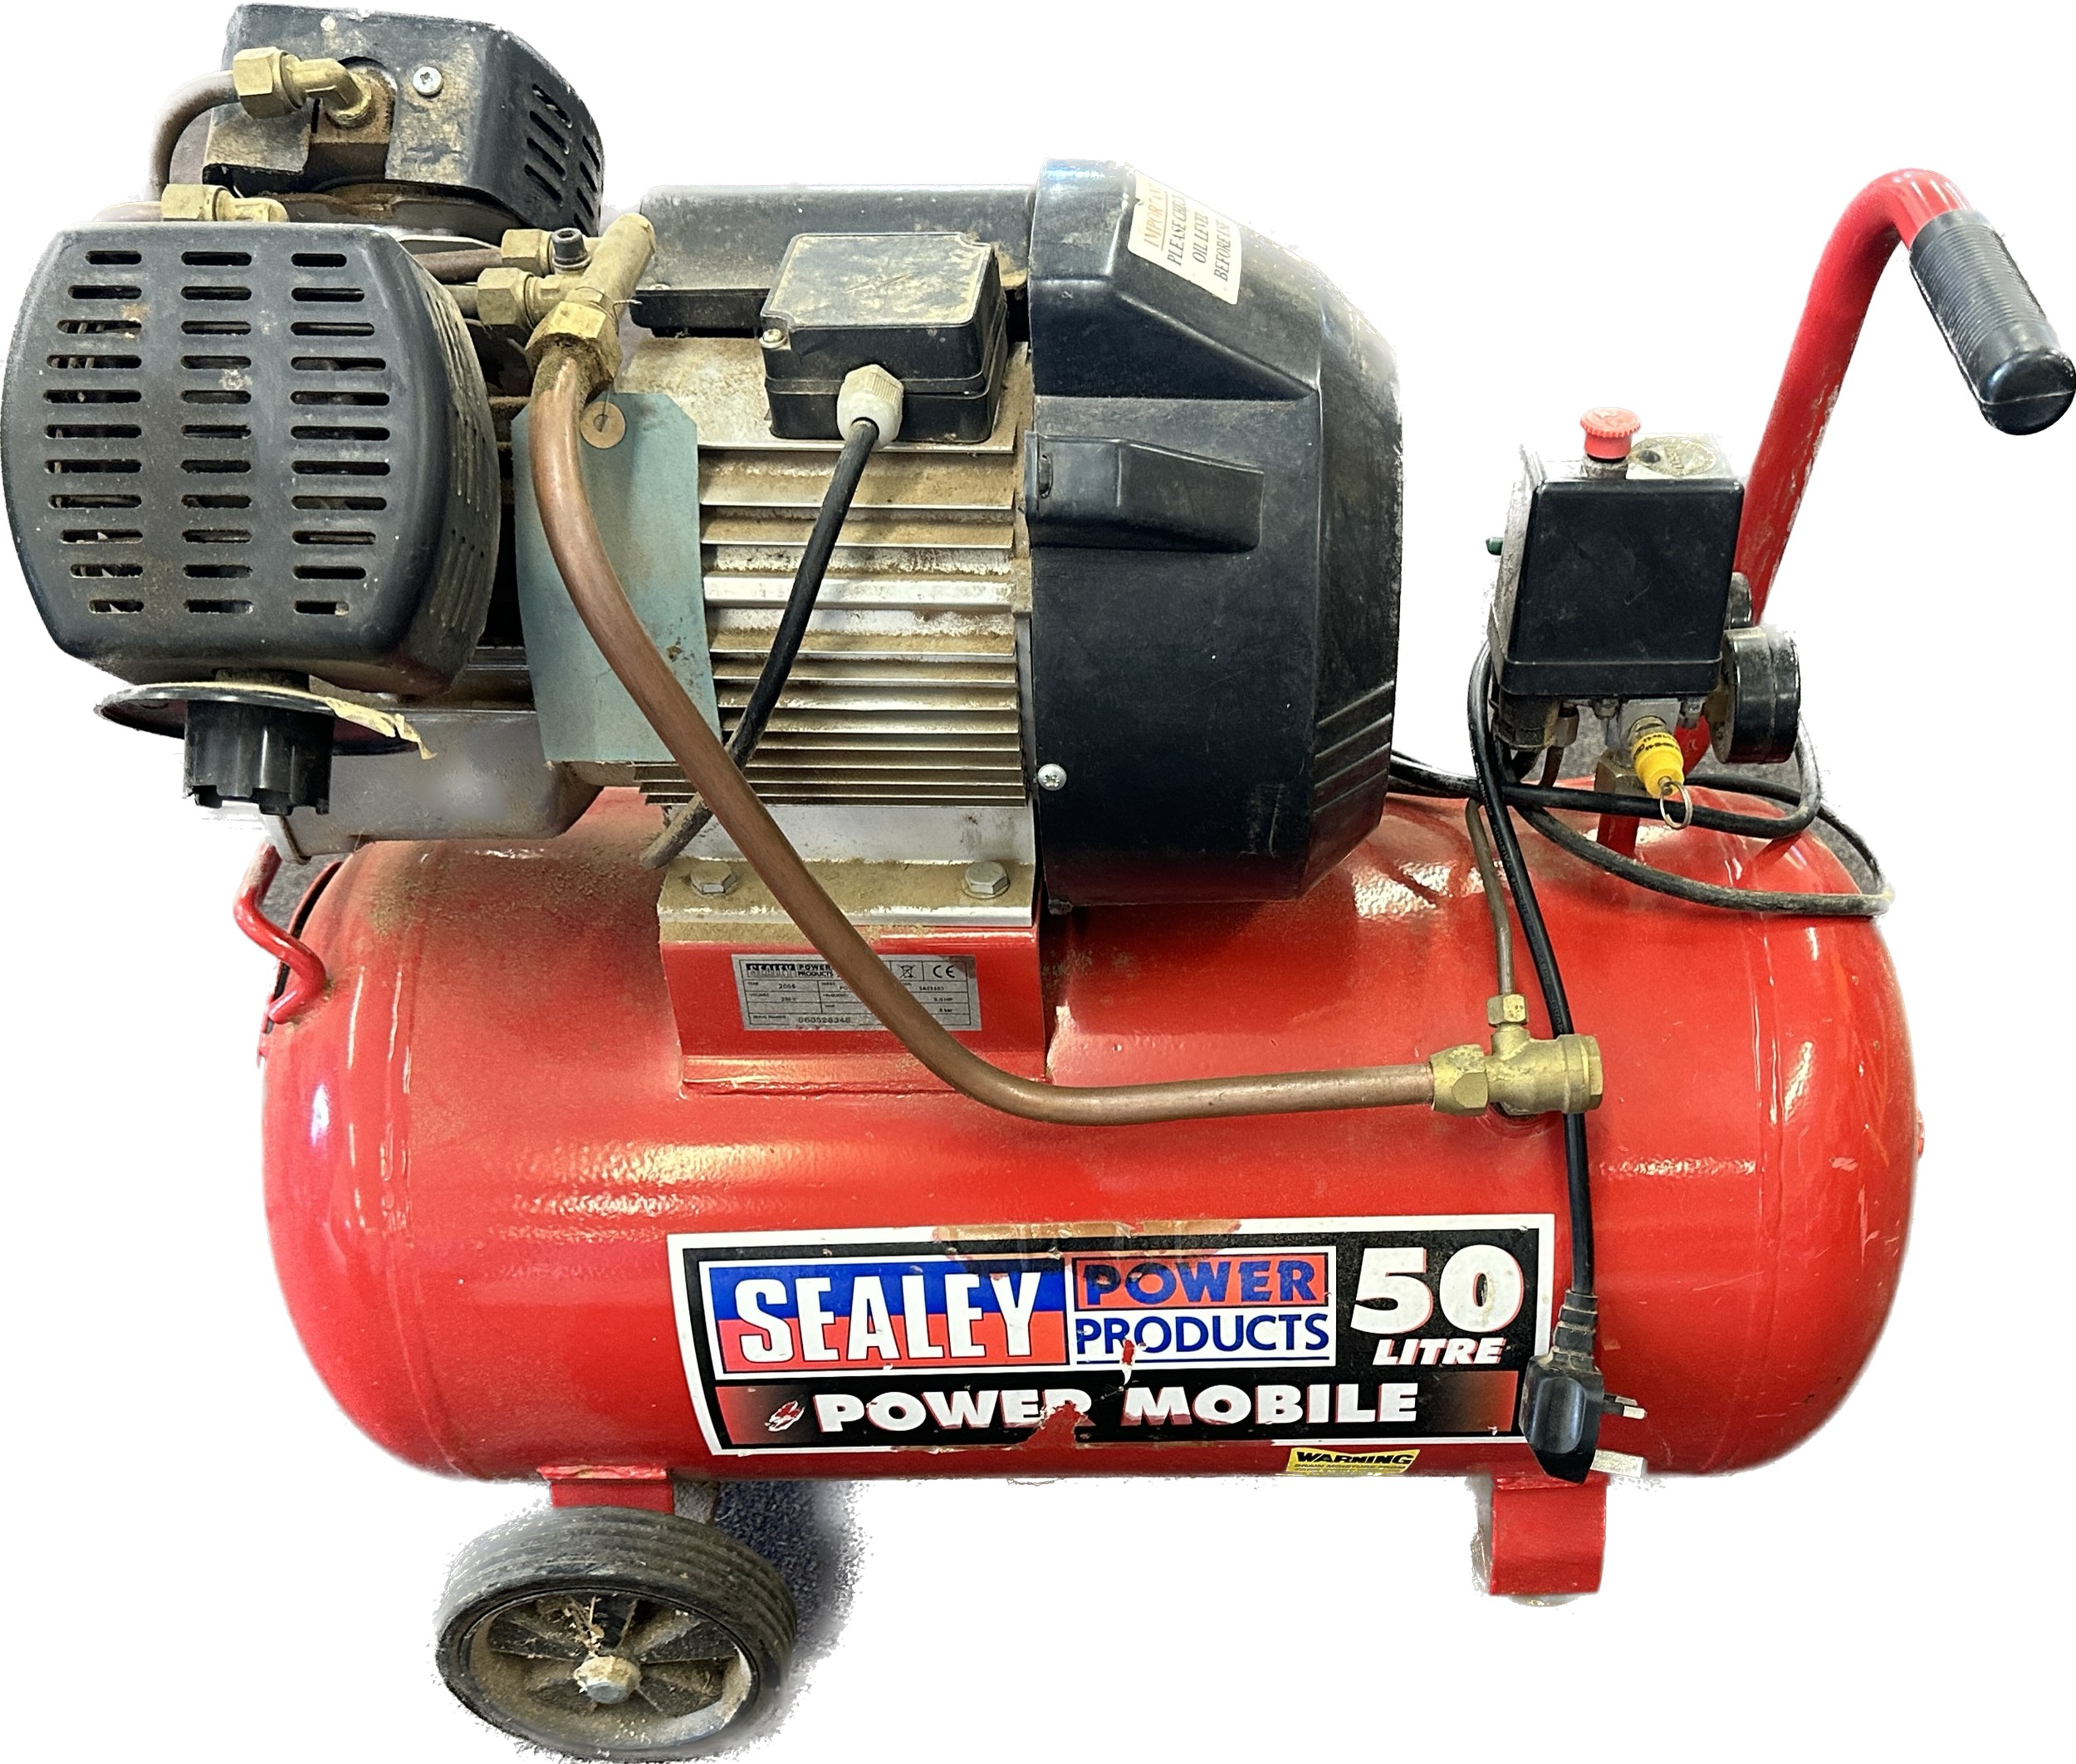 Sealey 50 litre compressor hp 3.0, working order - Image 4 of 4